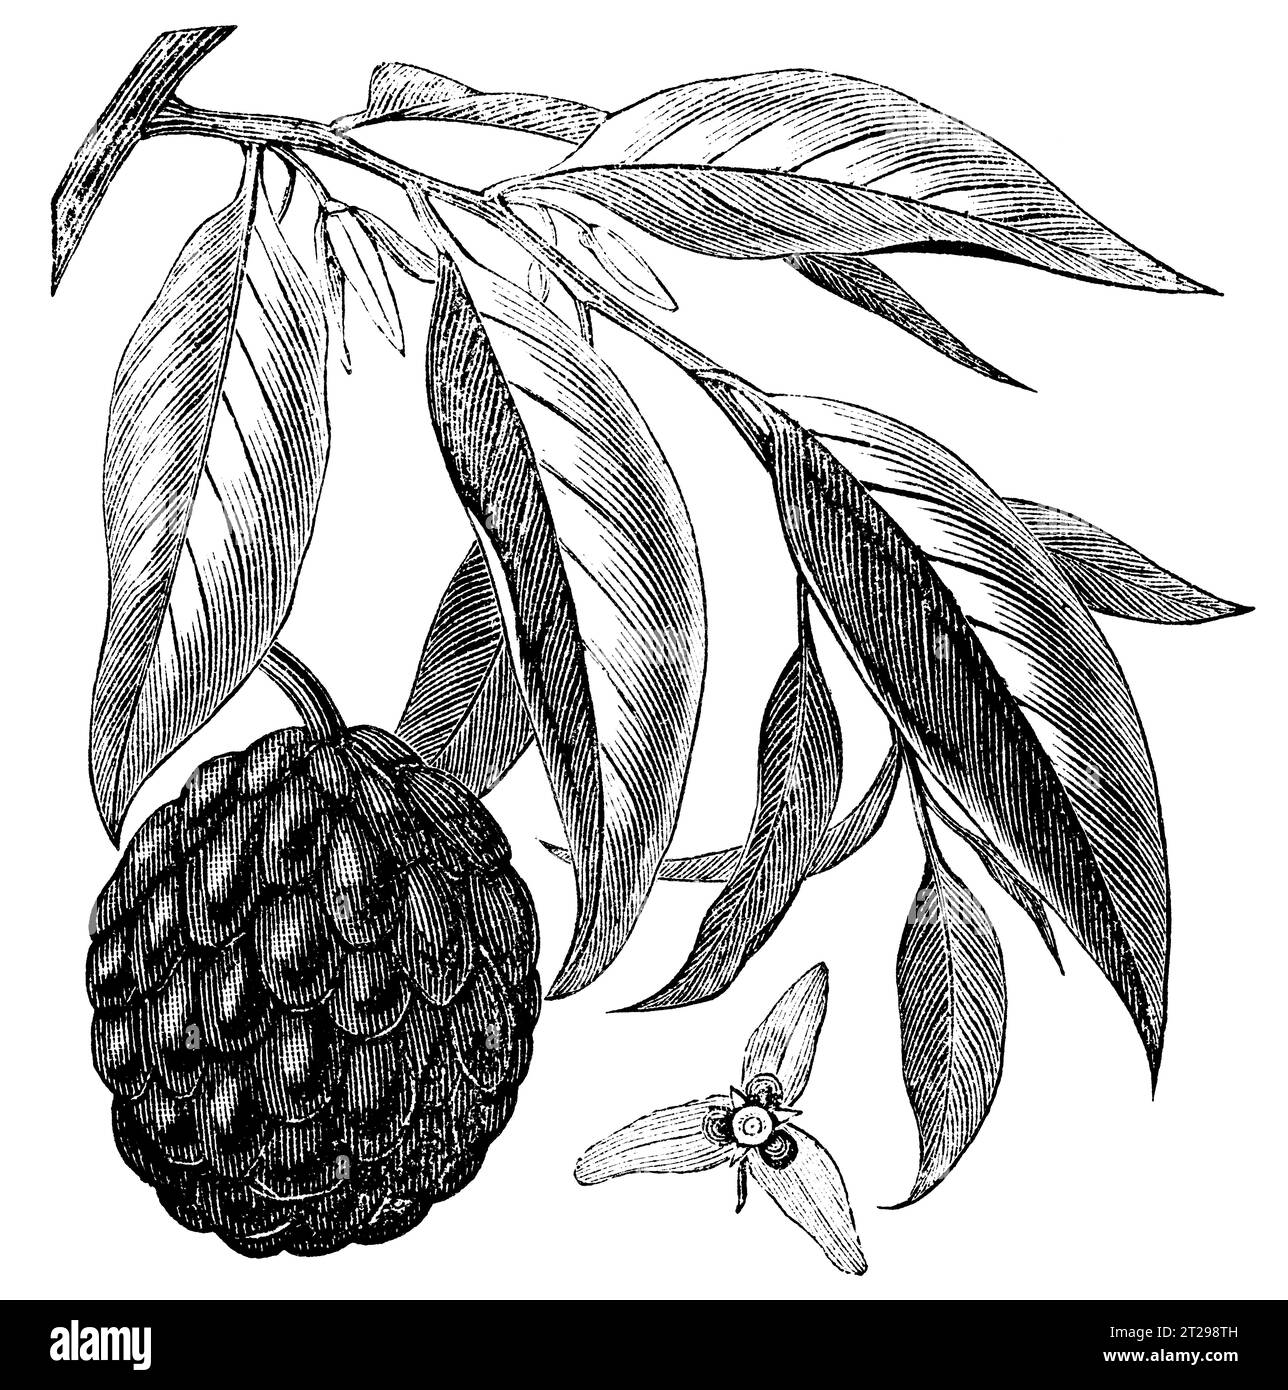 Hand Drawn African Fruits Custard Apple Vector Sketch Illustration Stock  Illustration - Download Image Now - iStock